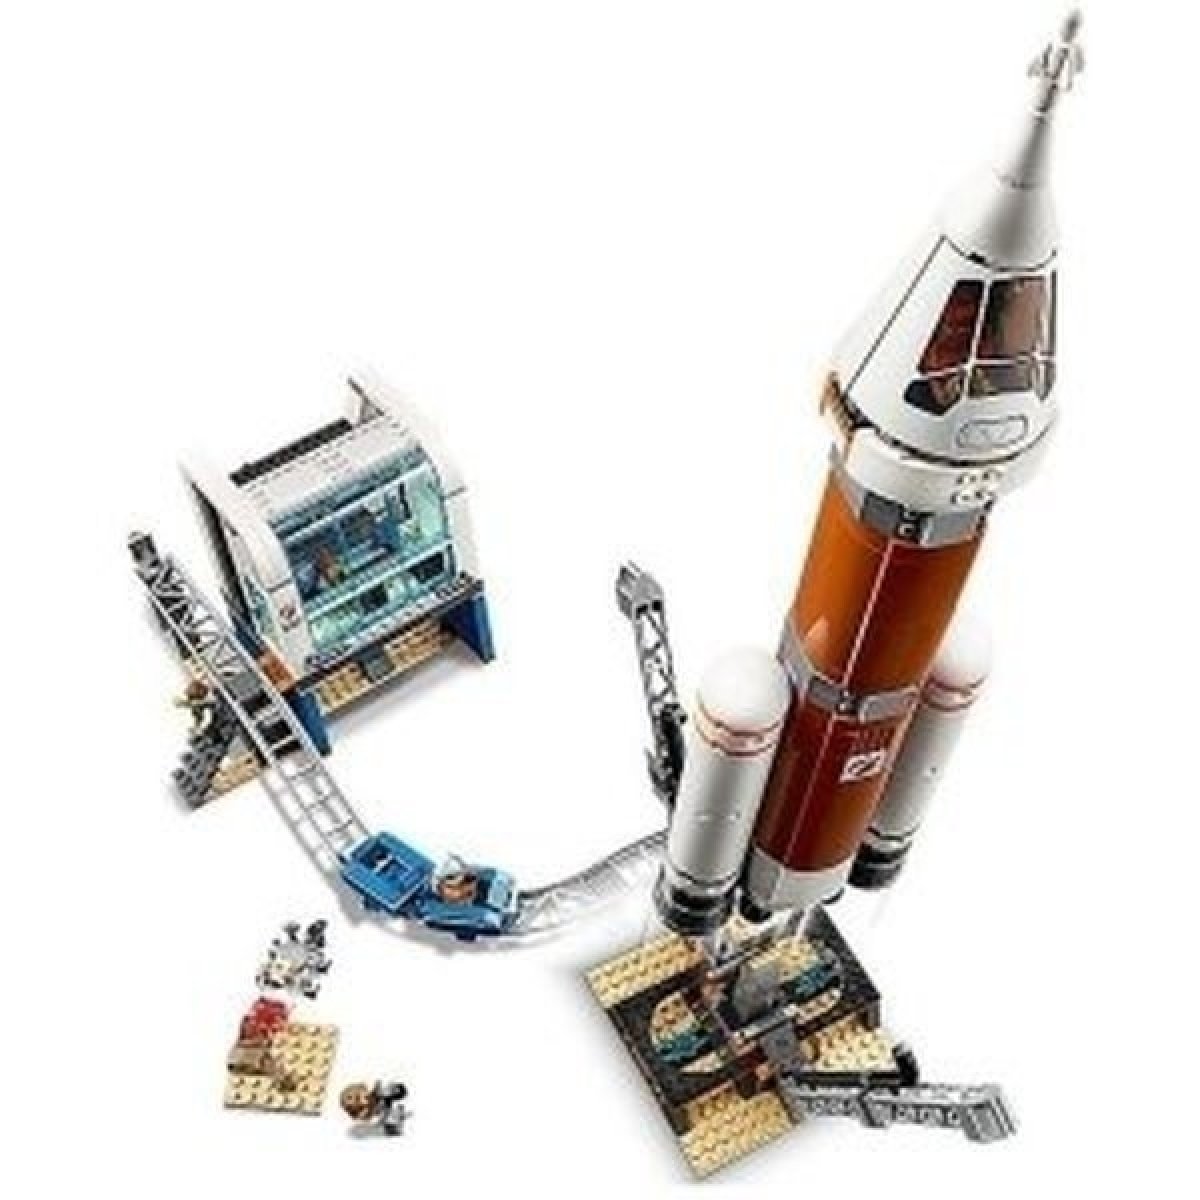 LEGO® City 60228 Štart vesmírnej rakety od 140 € - Heureka.sk